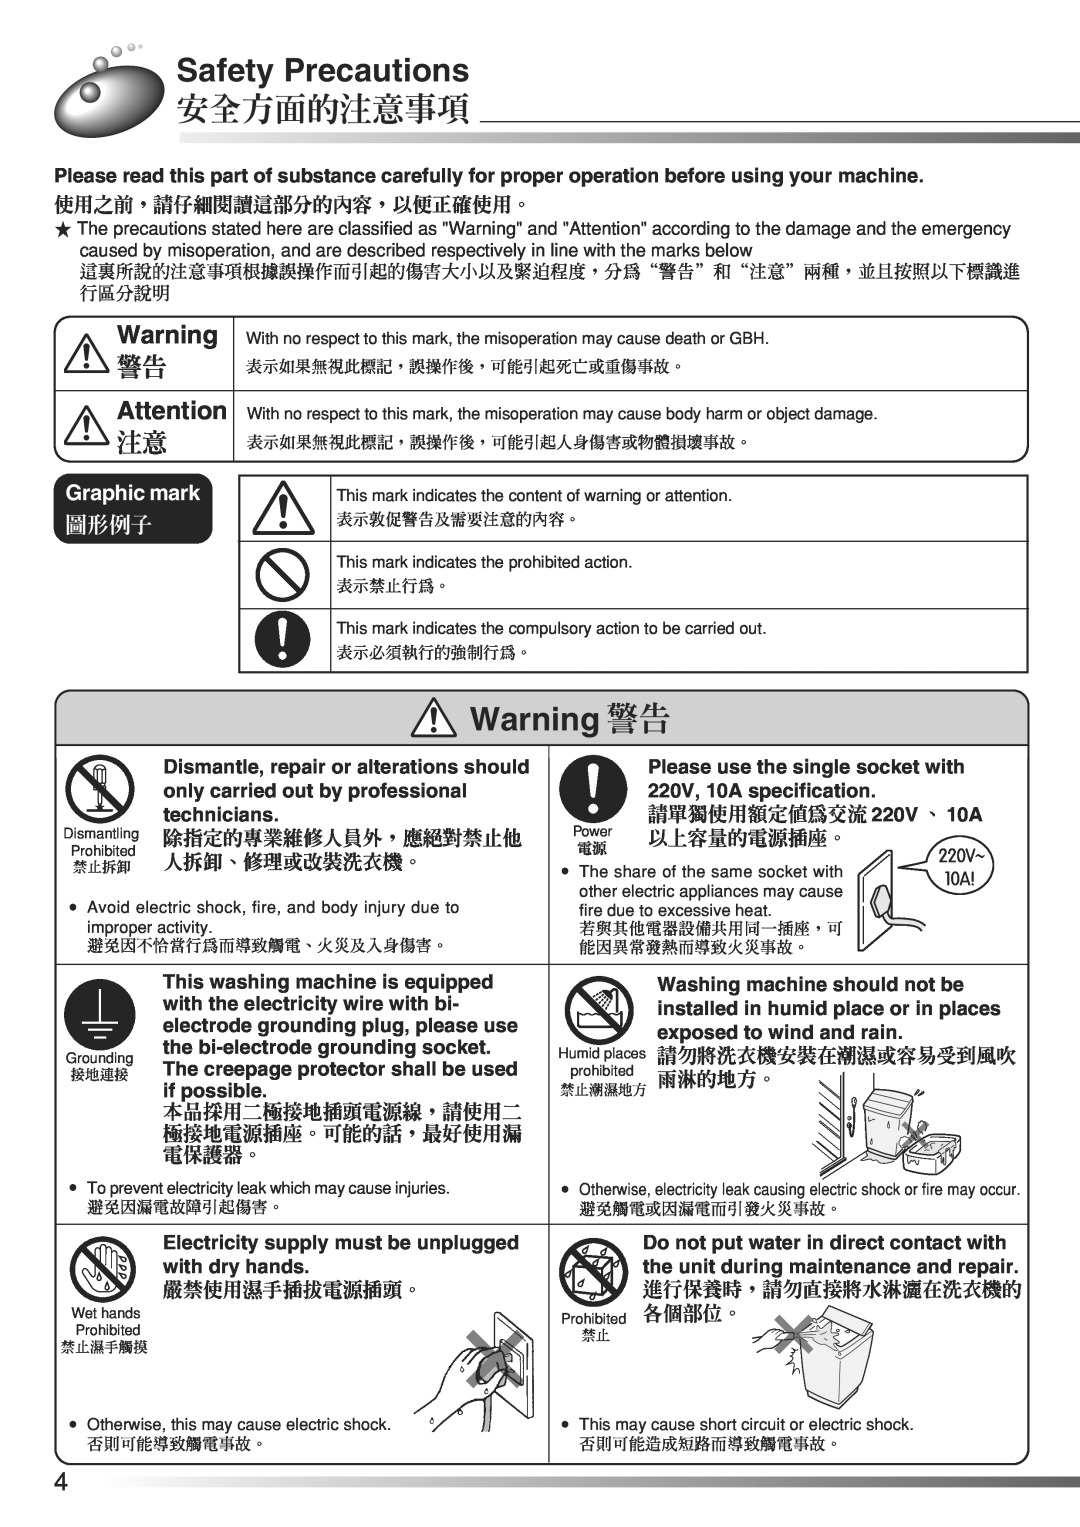 Hitachi AJ-S65KXP, AJ-S70KXP Safety Precautions, 安全方面的注意事項, Warning 警告, Graphic mark, 圖形例子, 使用之前，請仔細閱讀這部分的內容，以便正確使用。 